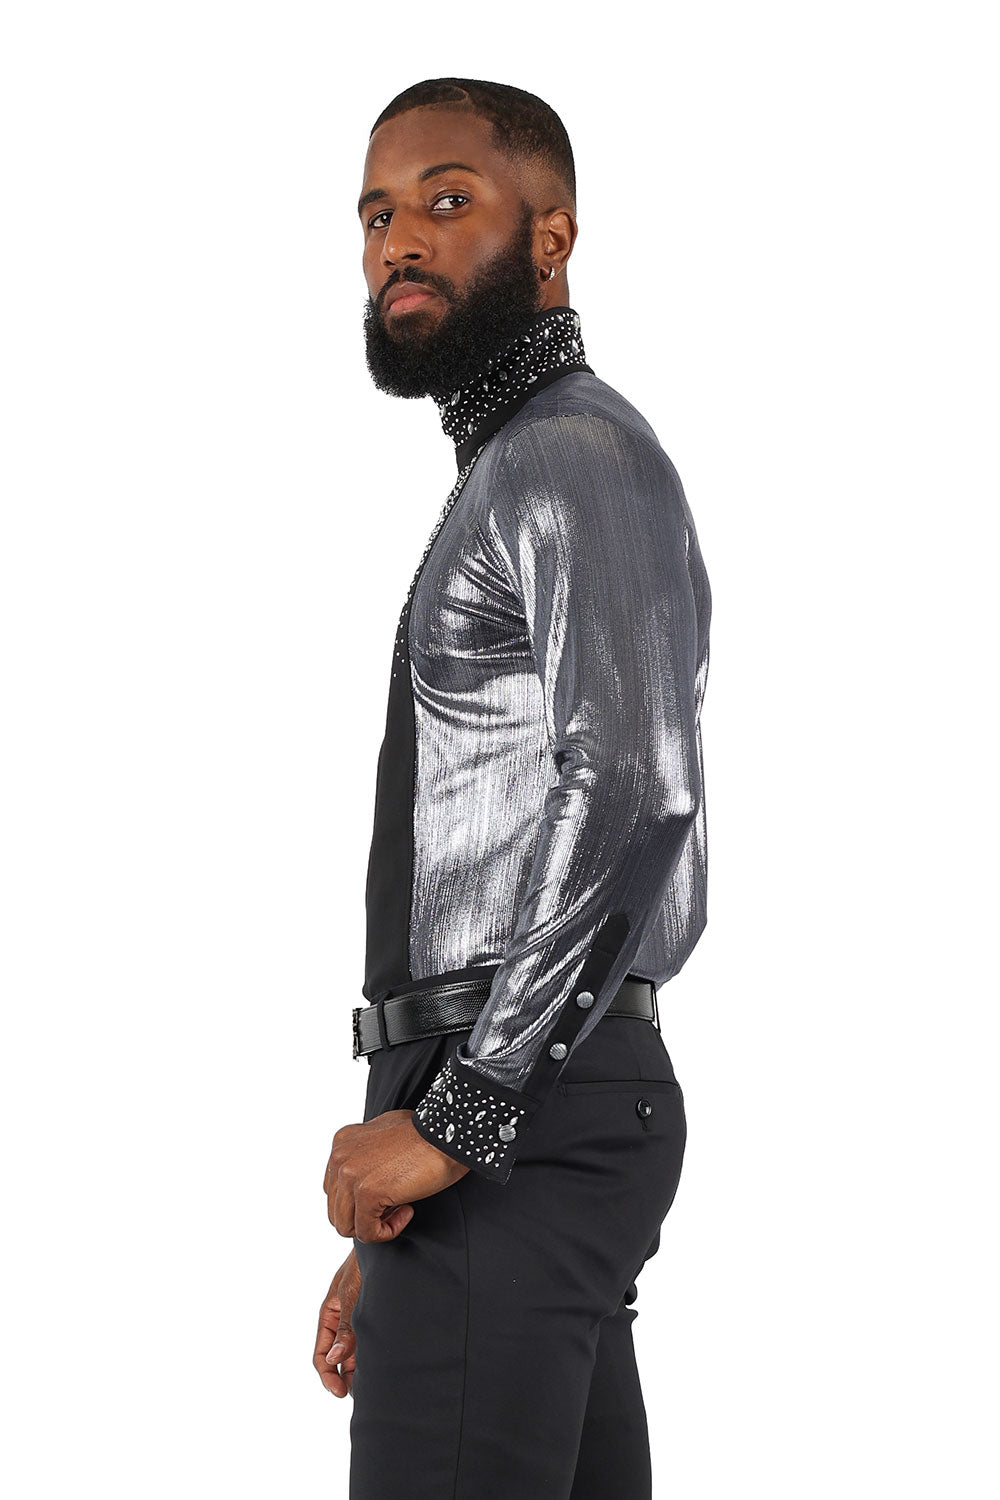 BARABAS Men's Luxury Rhinestone Long Sleeve Turtle Neck shirt 3MT04 Black and Silver